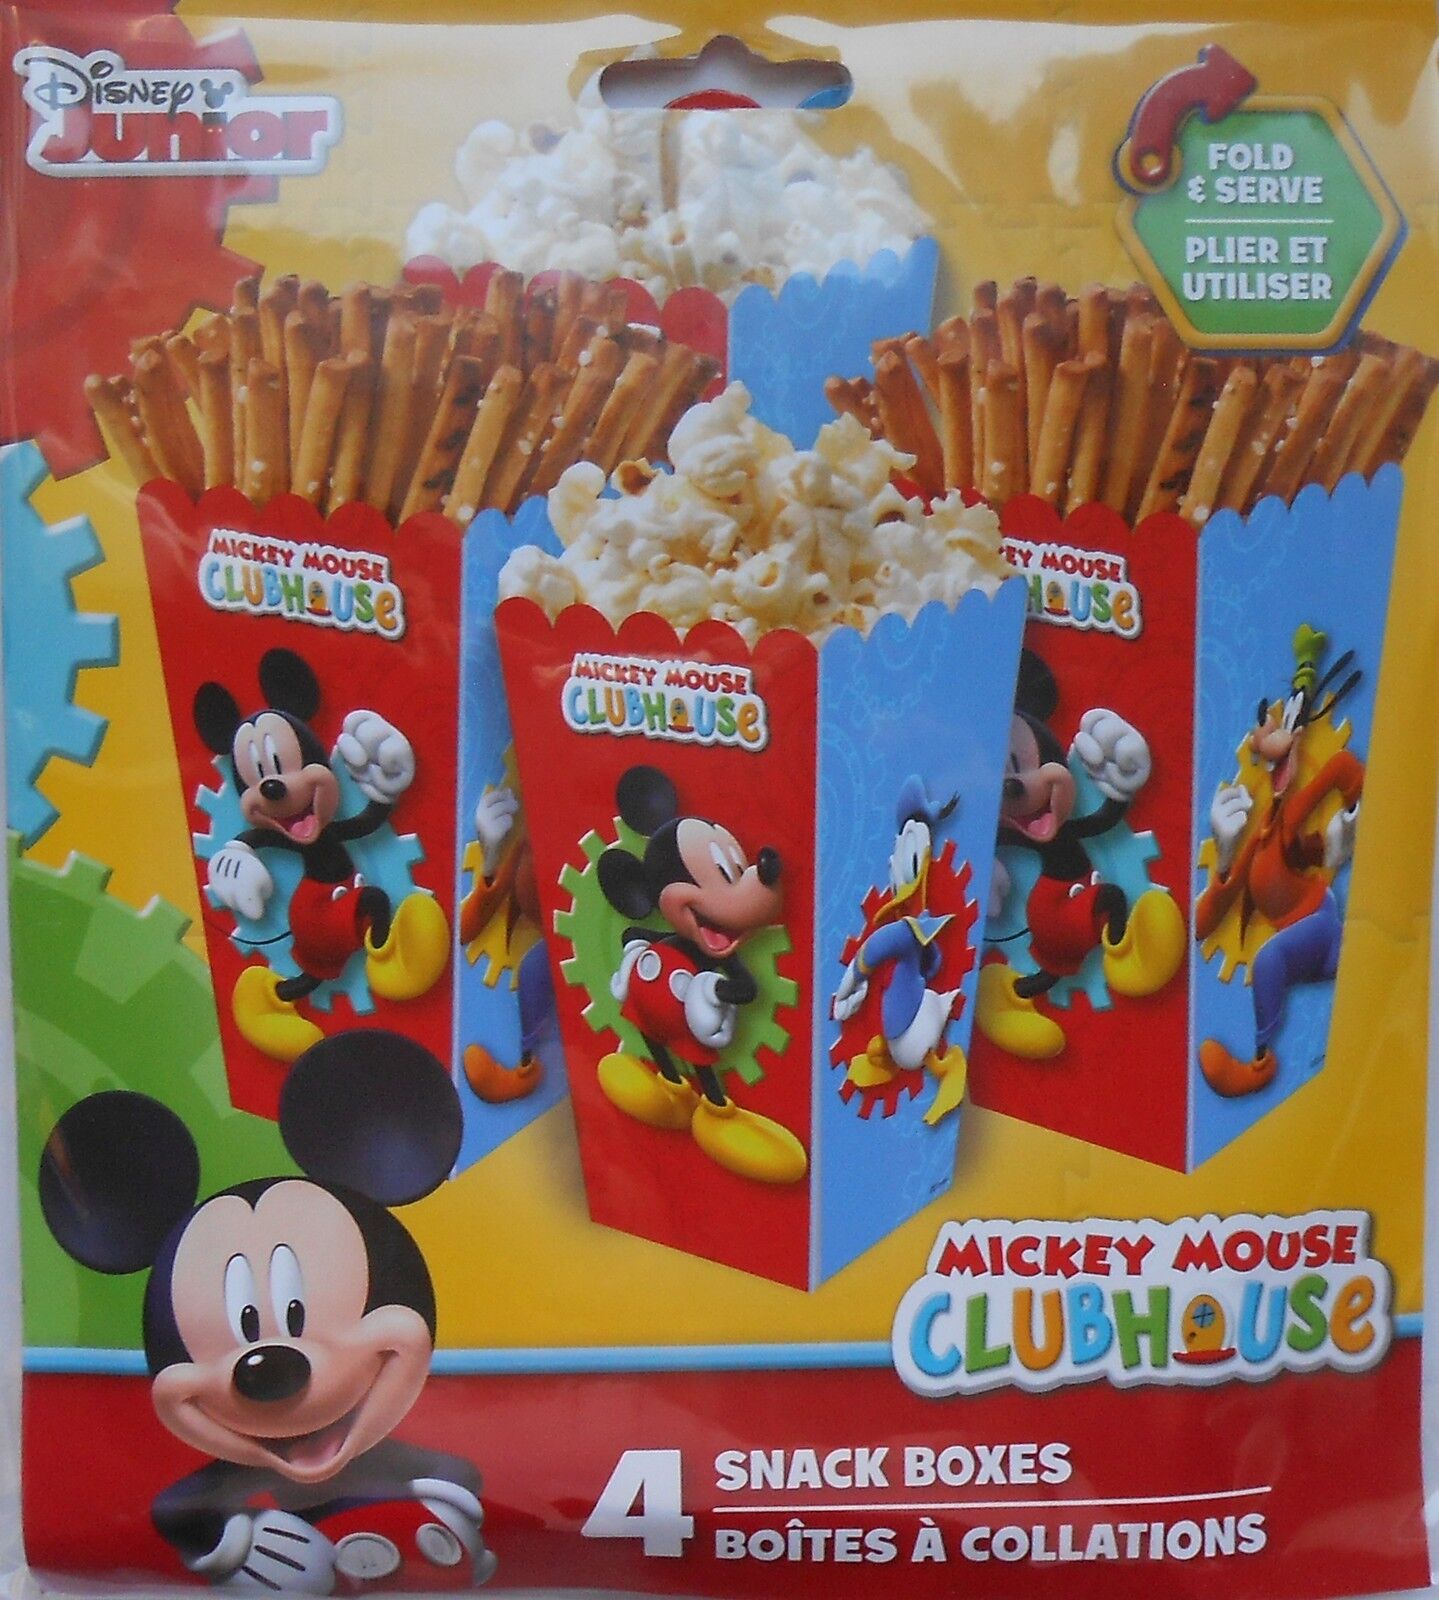 Amscan Mickey Mouse Design Plastic Favor Cup - 16 oz. | Multicolor | 1 Pc.